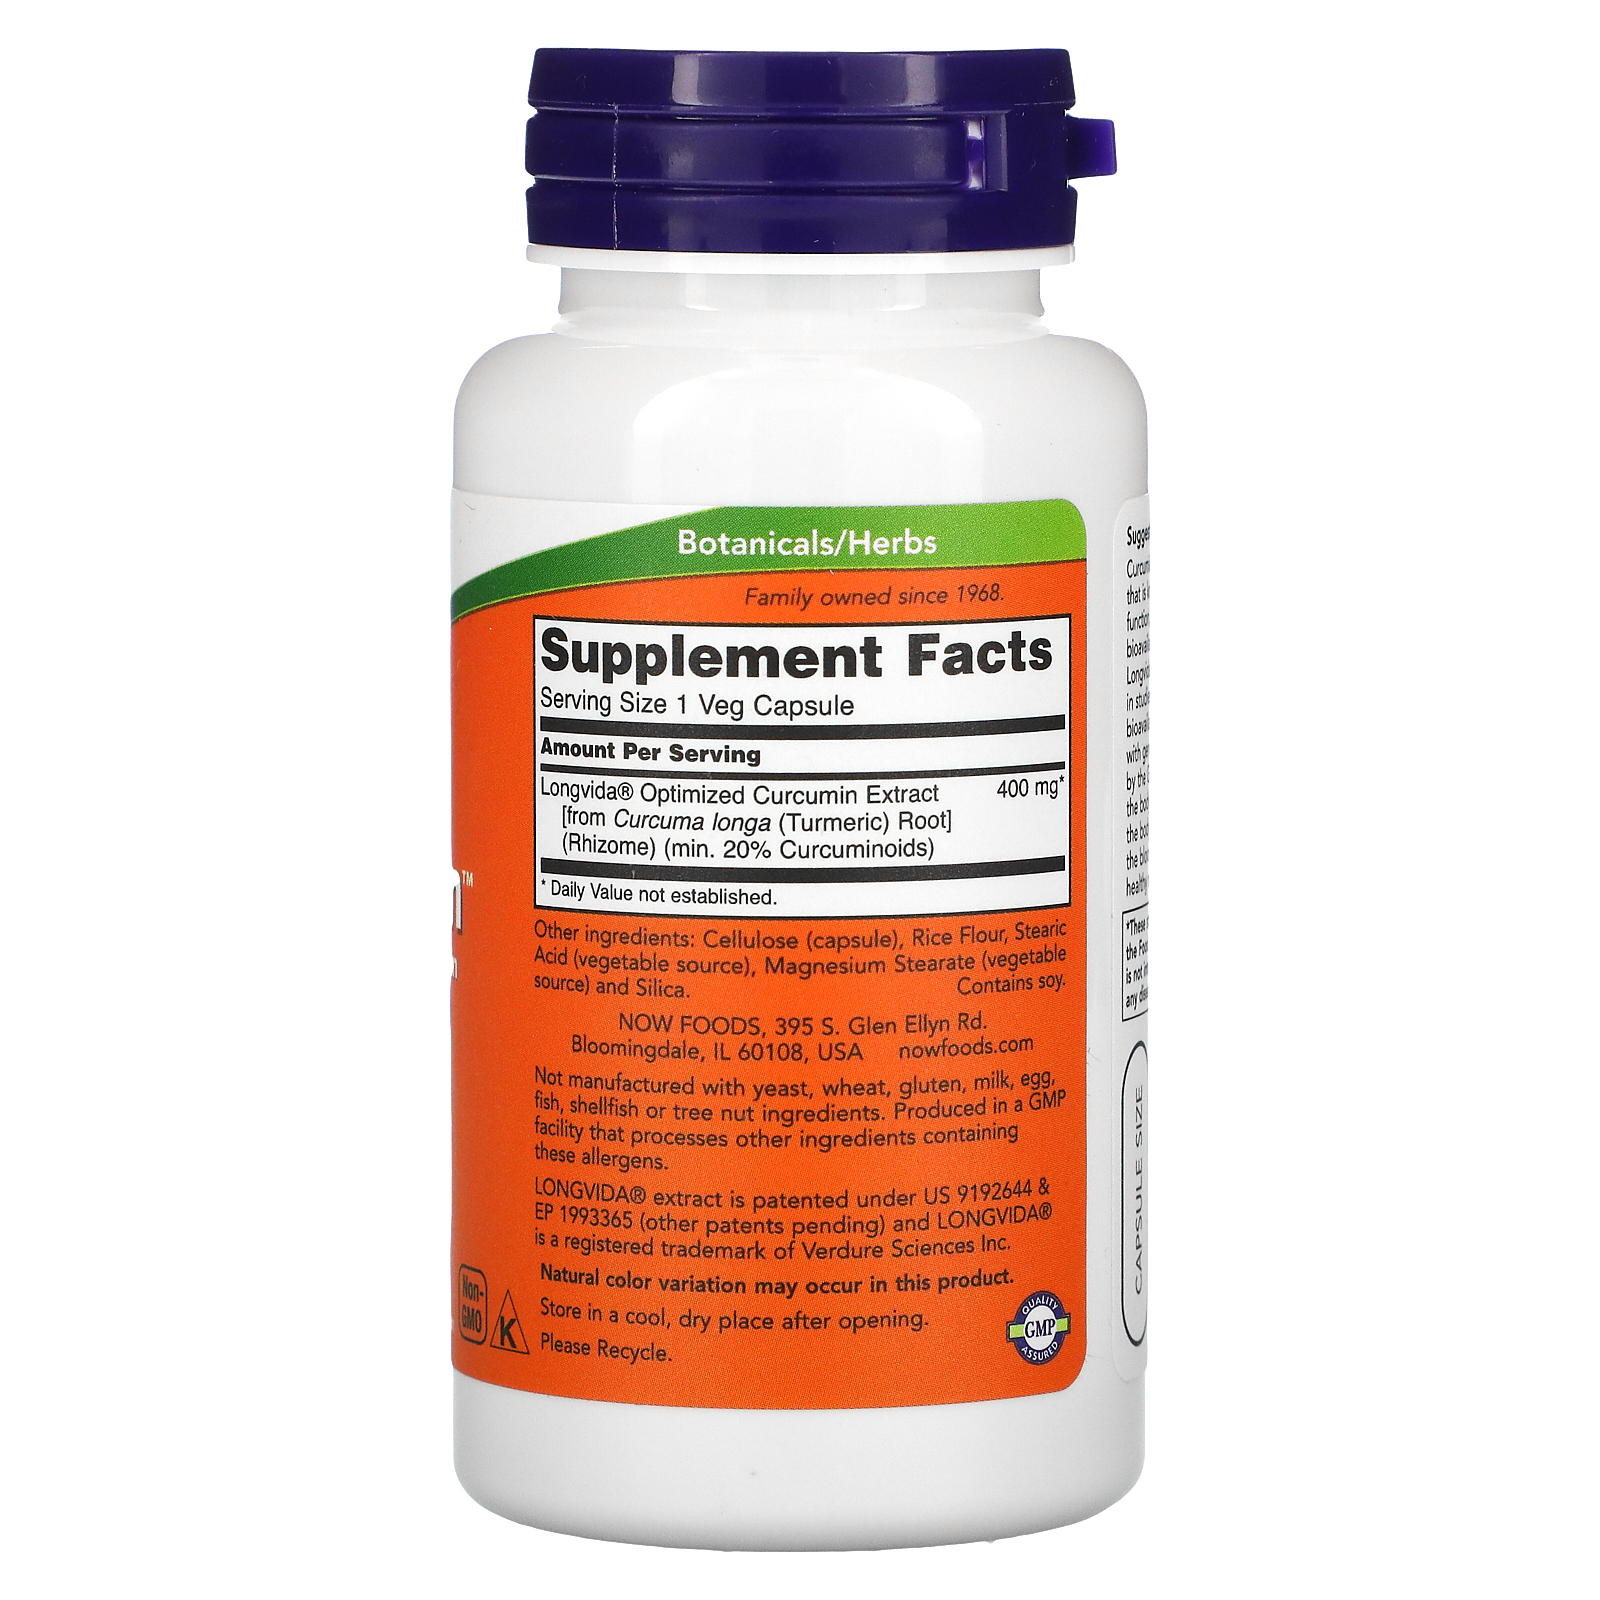 CurcuBrain Longvida®, Куркумин Оптимизированный 400 мг - 50 капсул